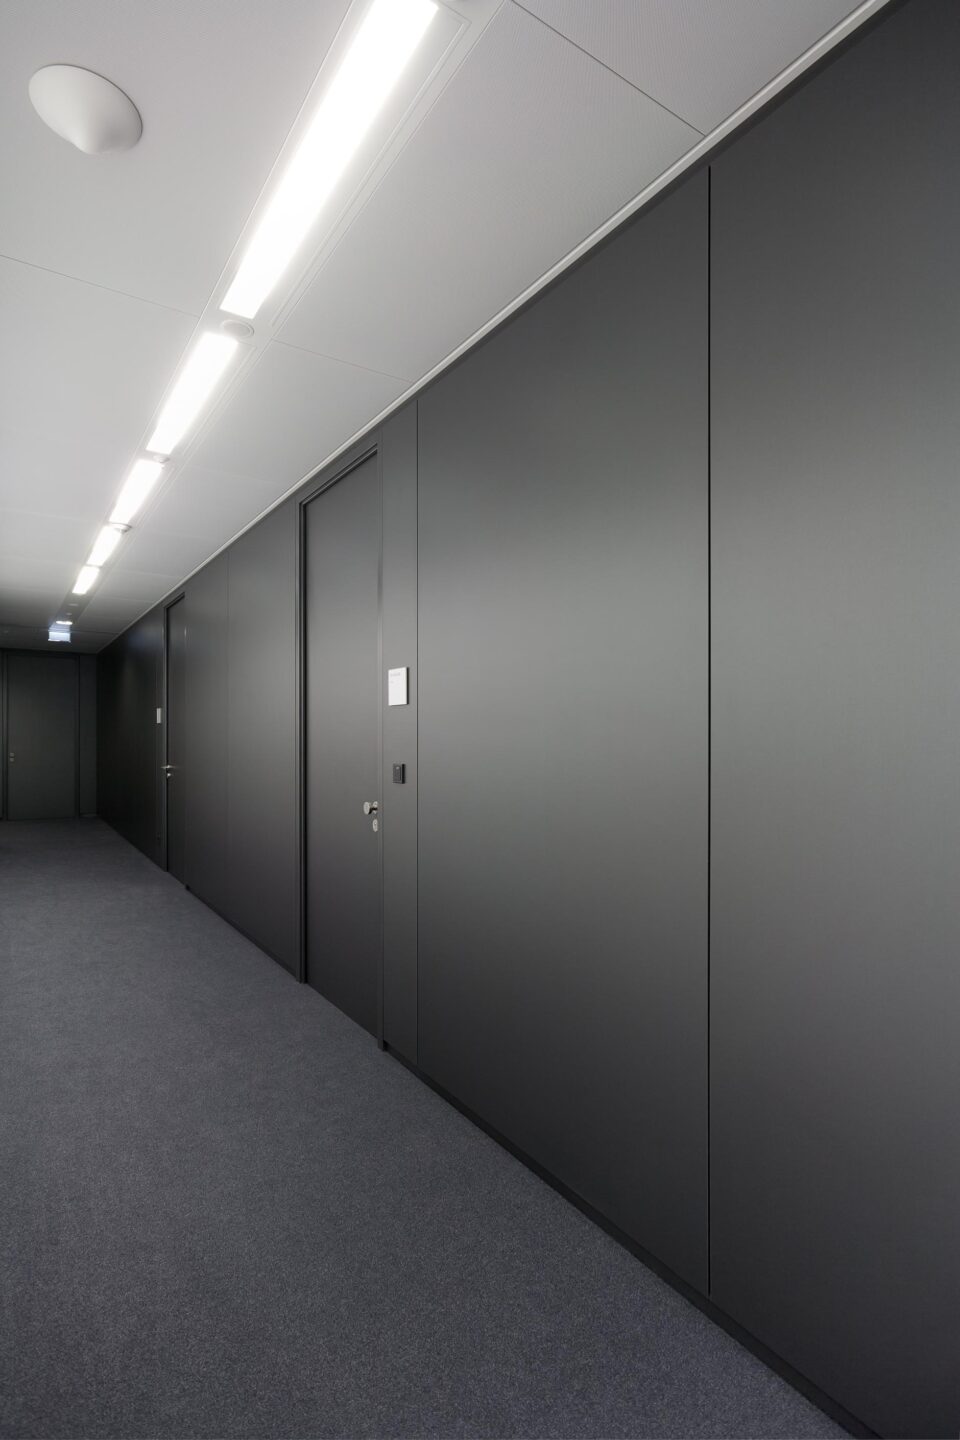 feco-feederle│partition wall systems│ Deutsche Börse Headquarters, Eschborn